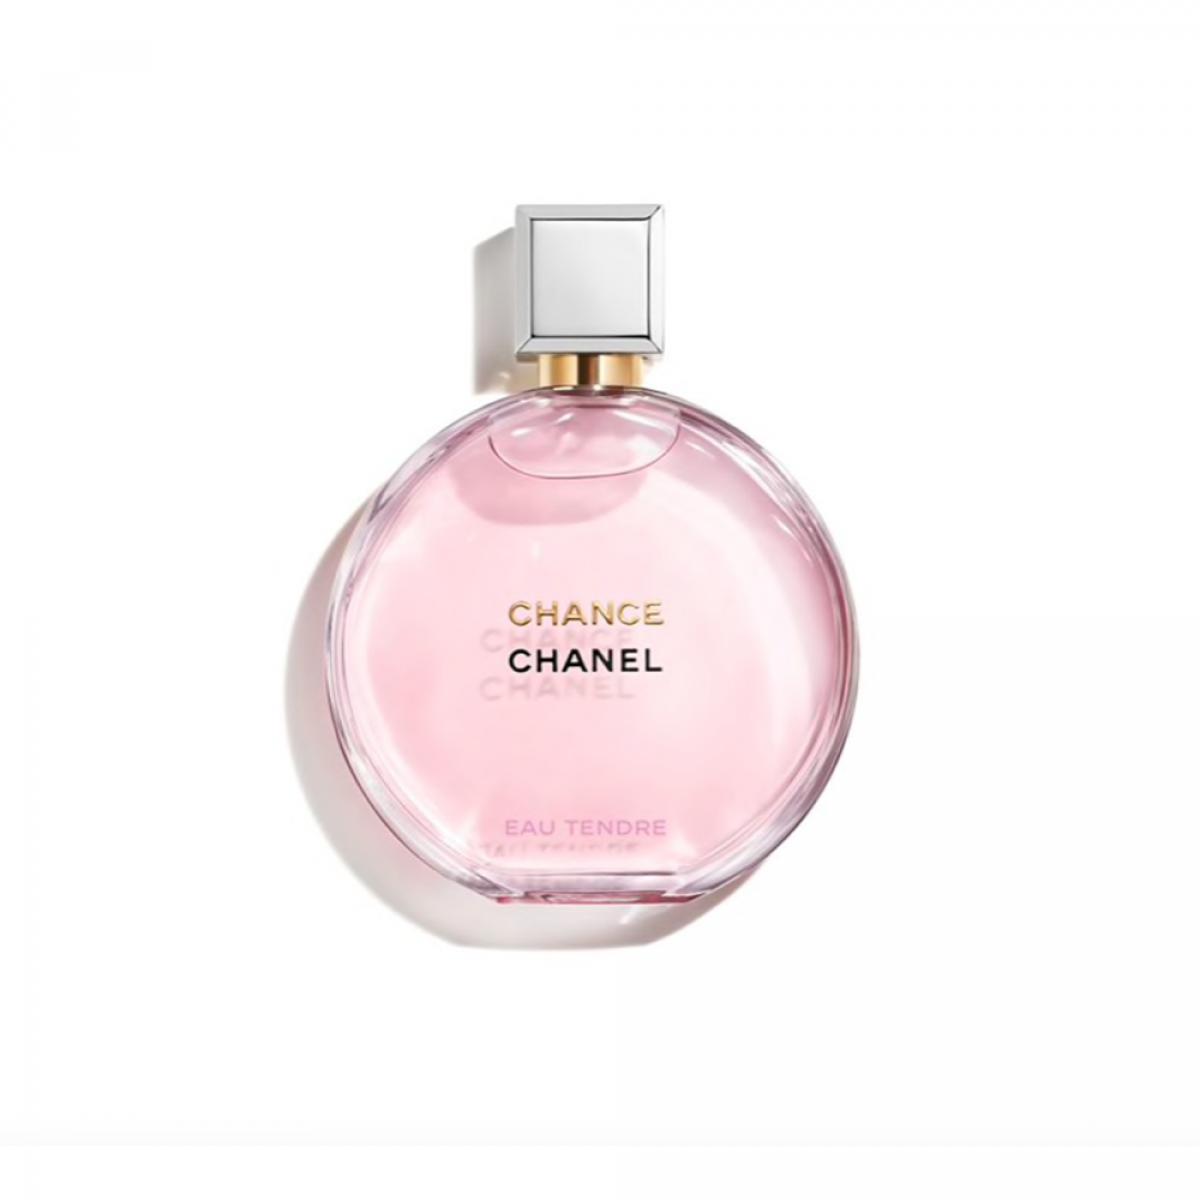 Chanel - Chance eau tendre